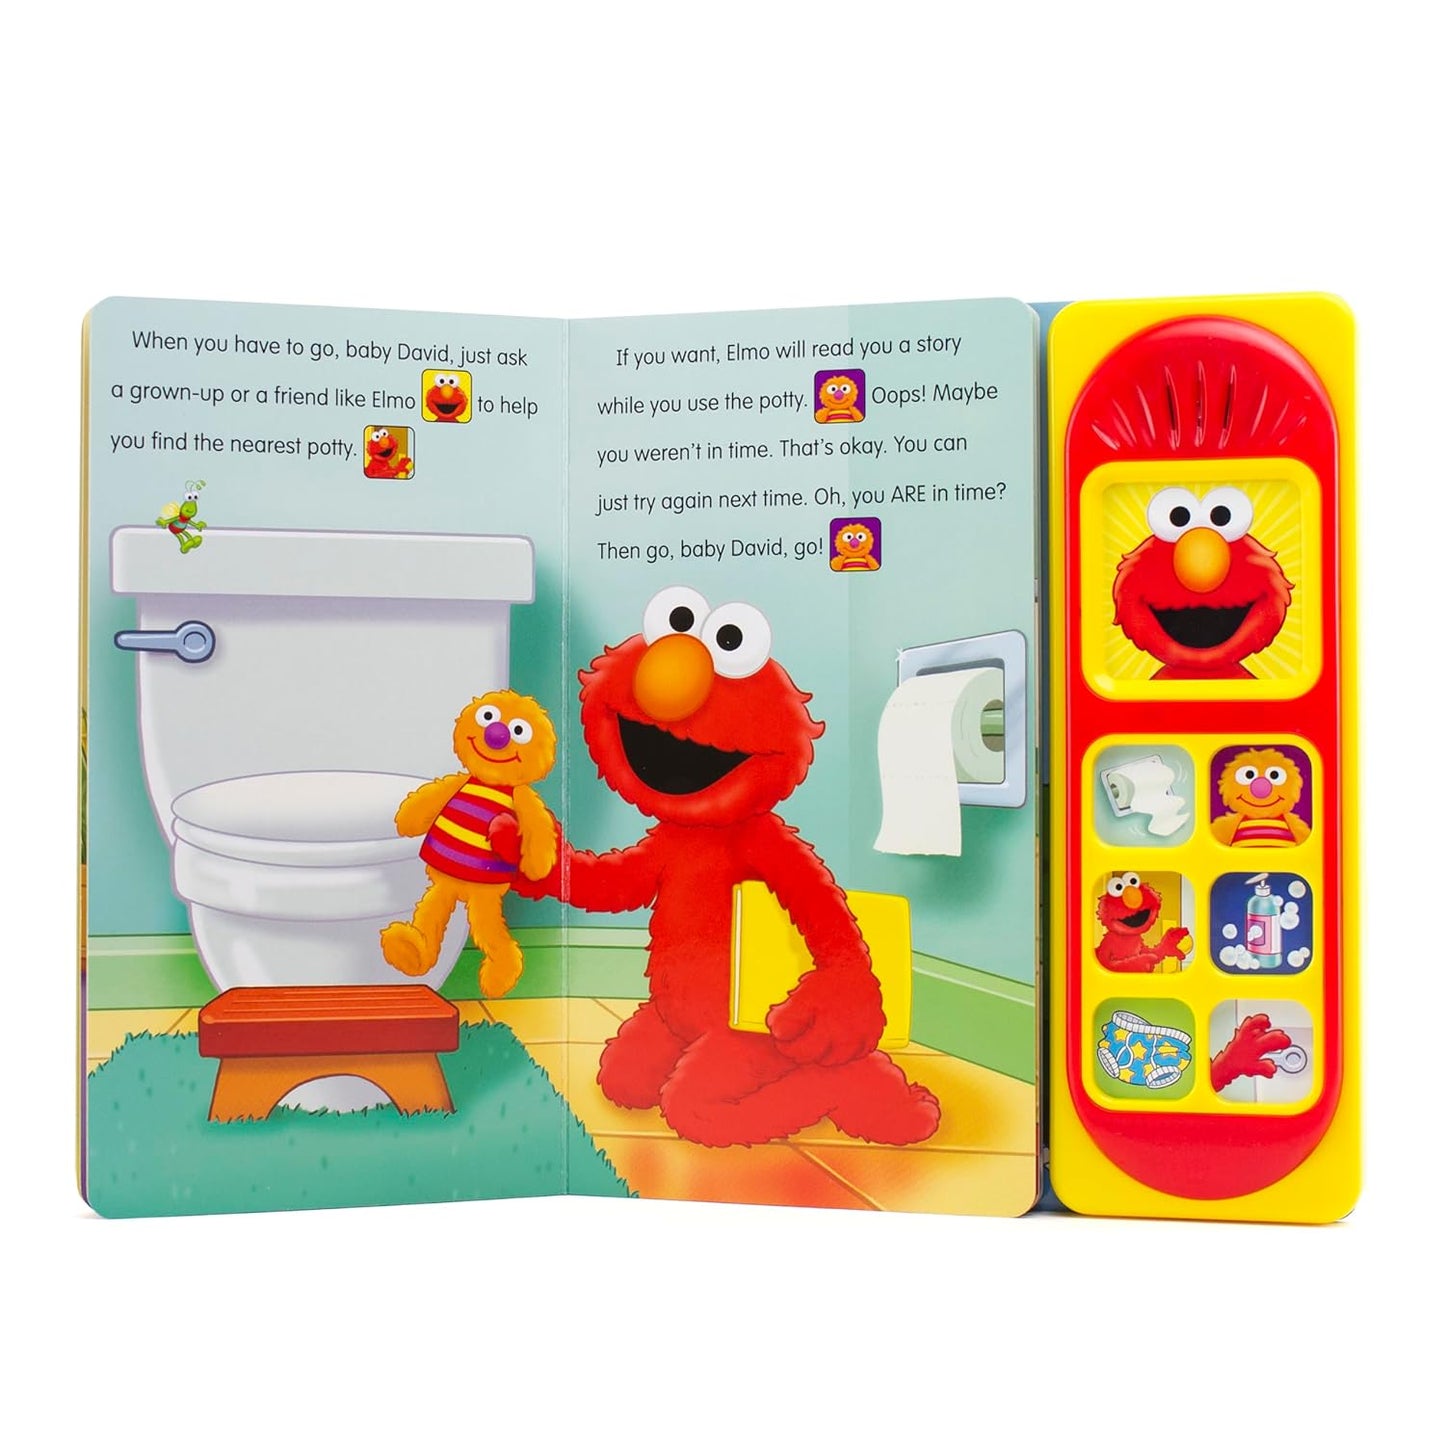 Sesame Street - Potty Time with Elmo - Potty Training Sound Book - PI Kids